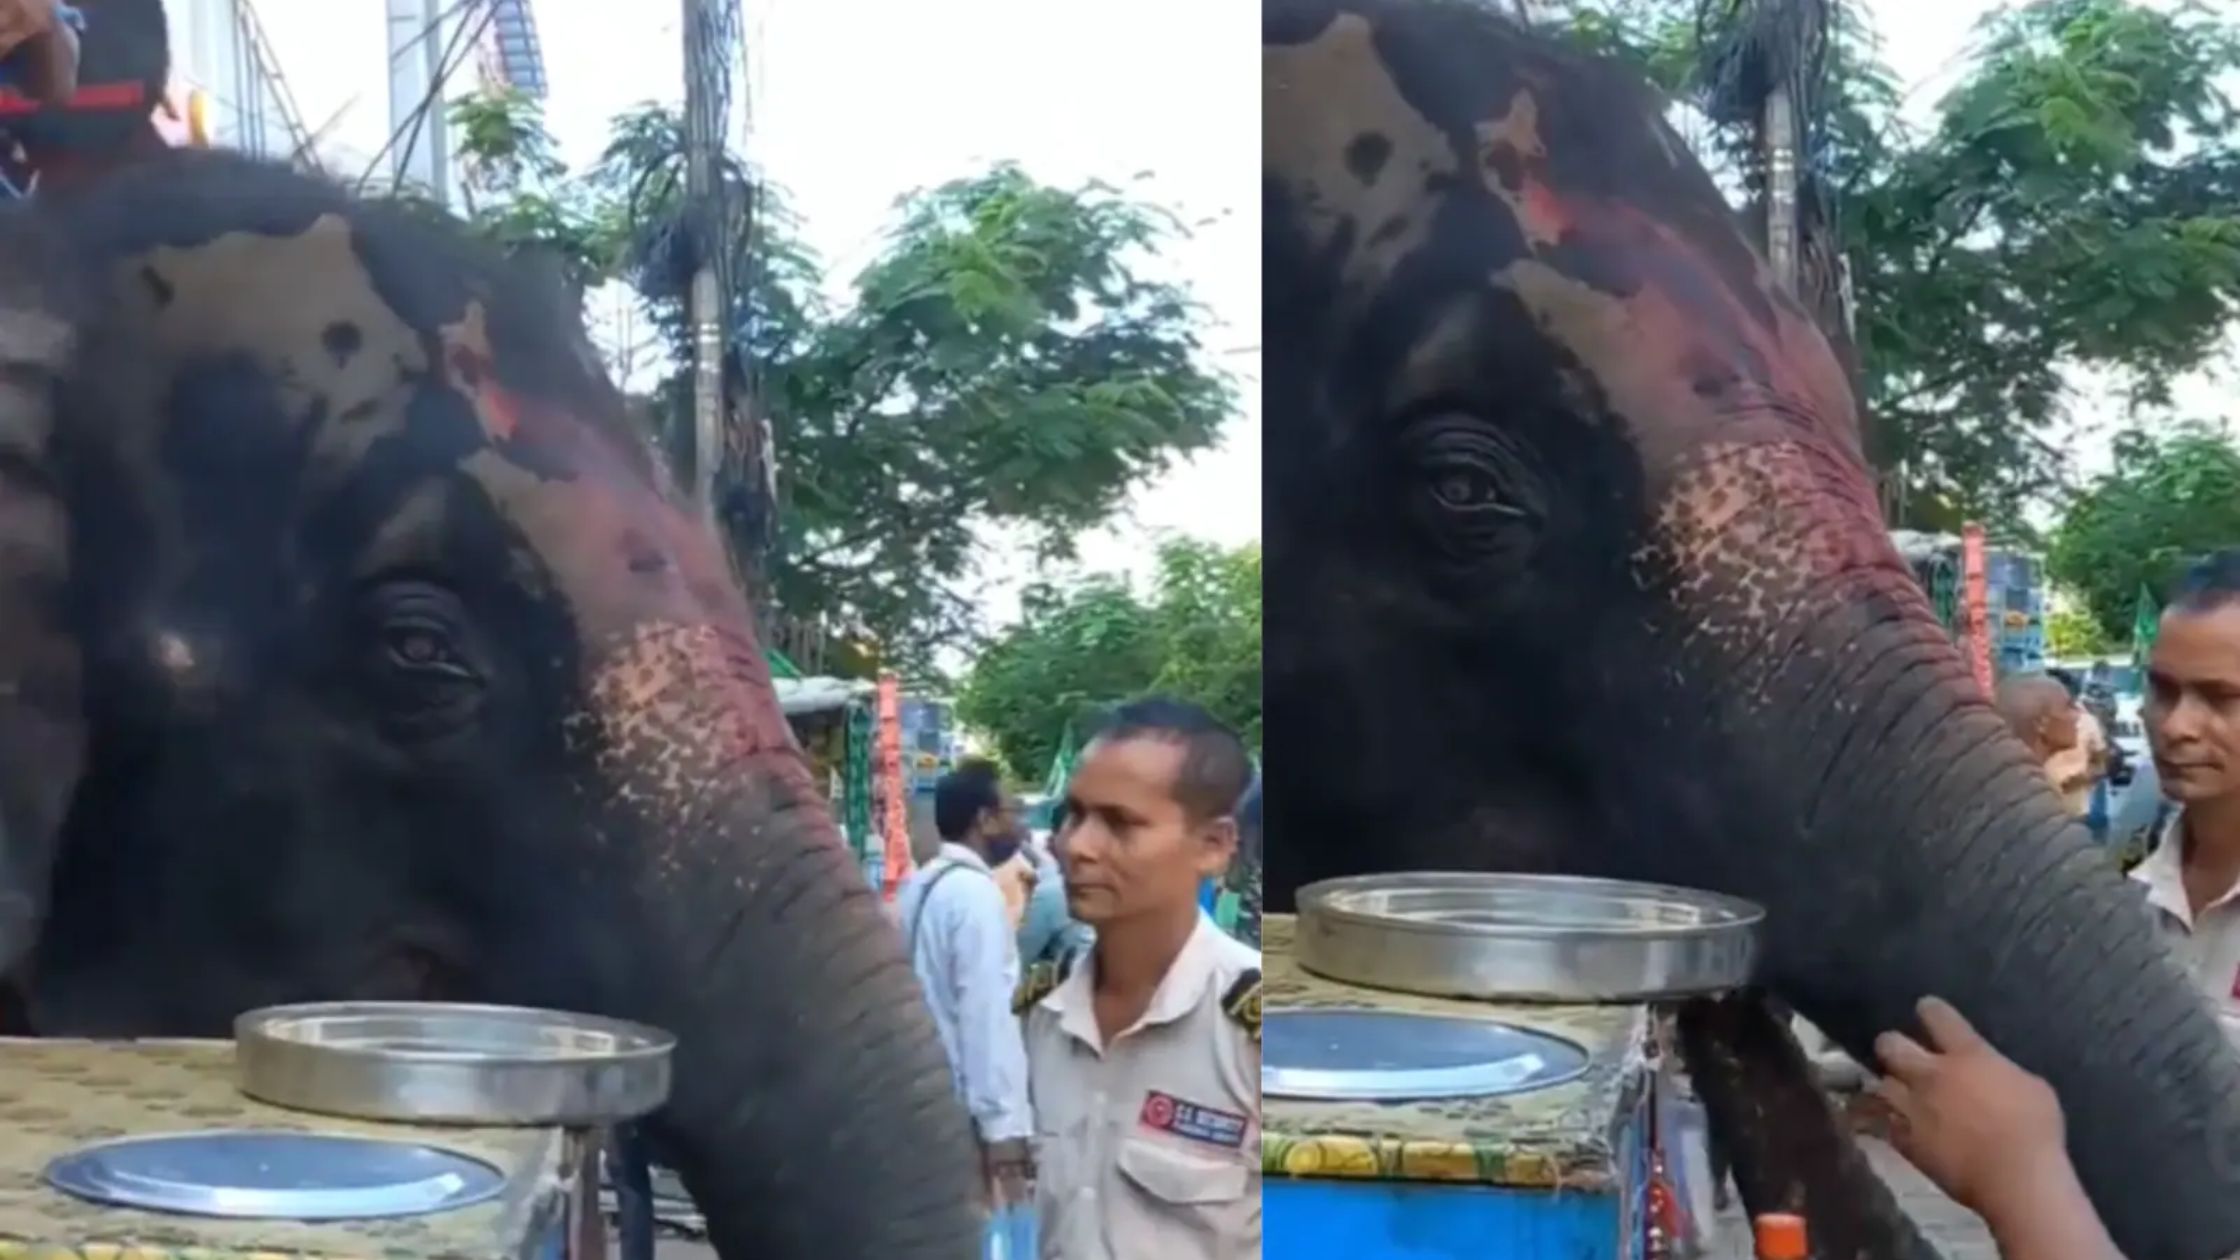 Seeing the elephant eating golgappas on the roadside